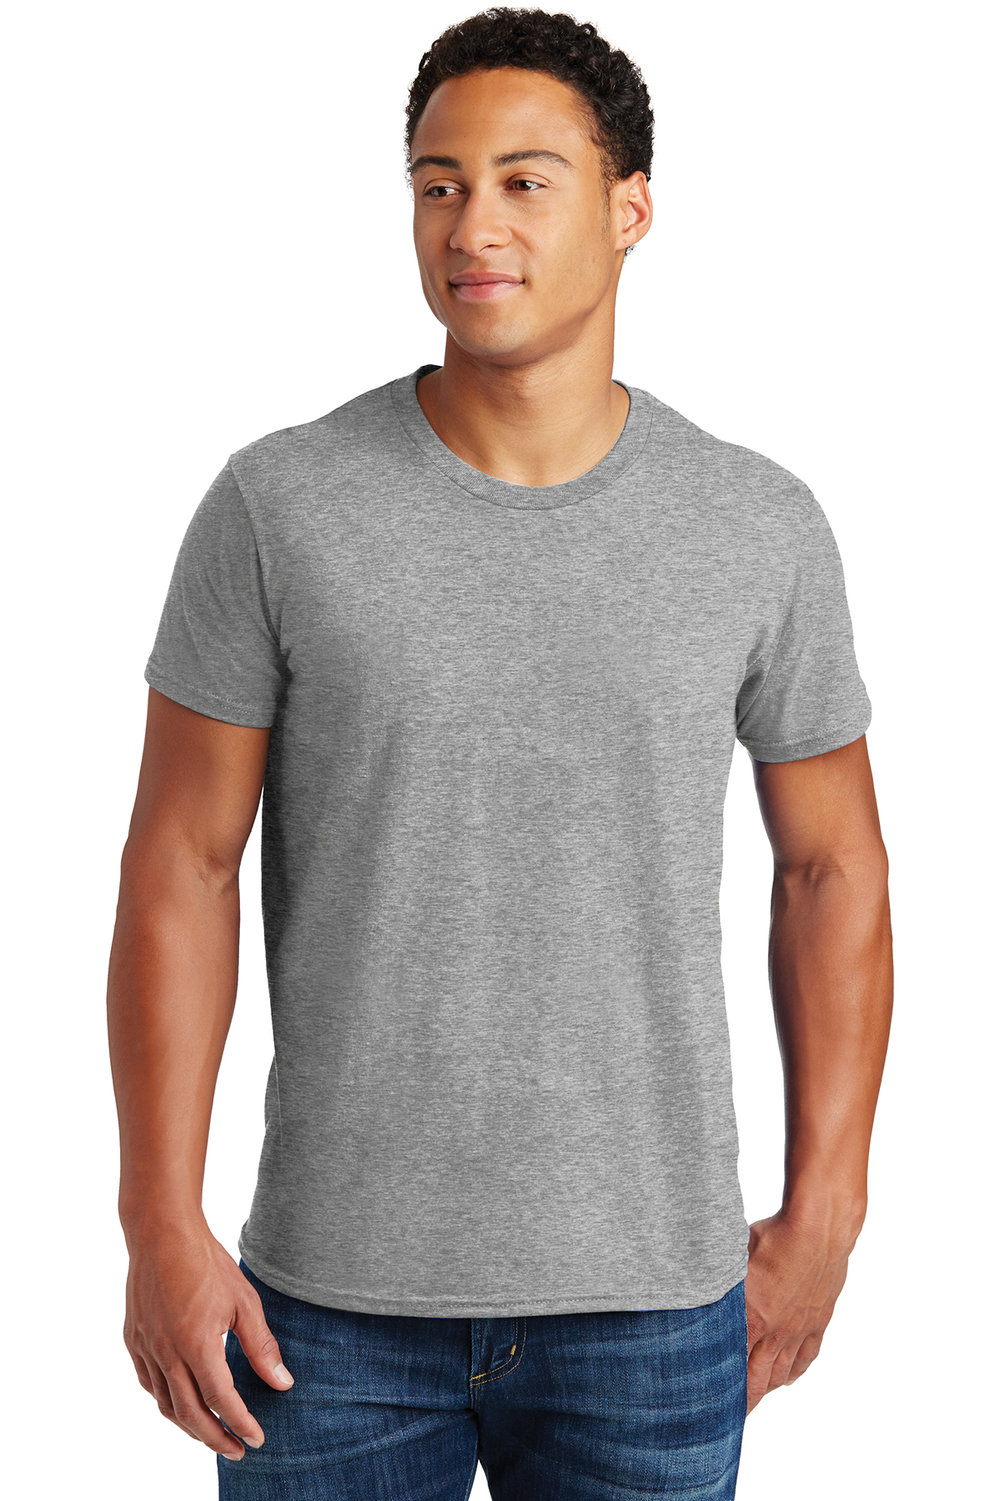 Steel gray 100/% Silk Knit Mens Crew T-shirt